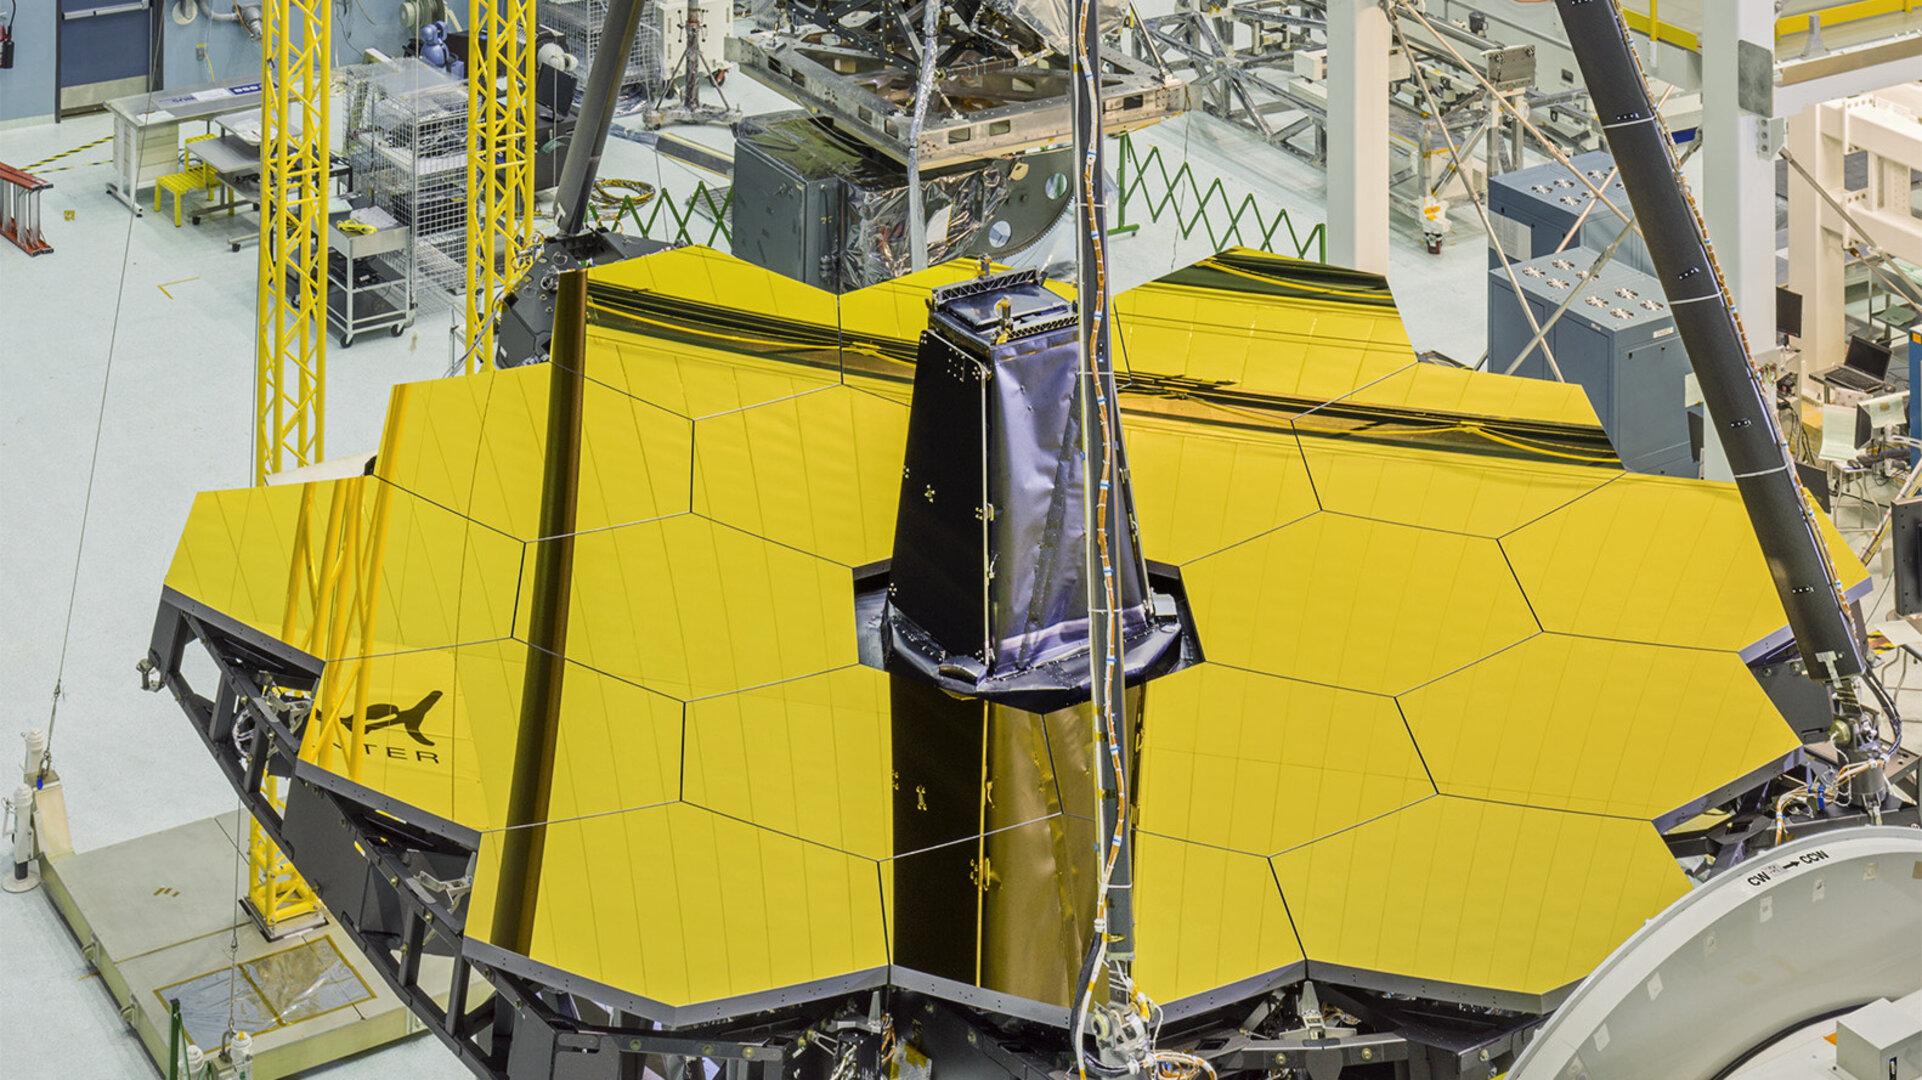 The NASA-ESA James Web Space Telescope fully deployed 